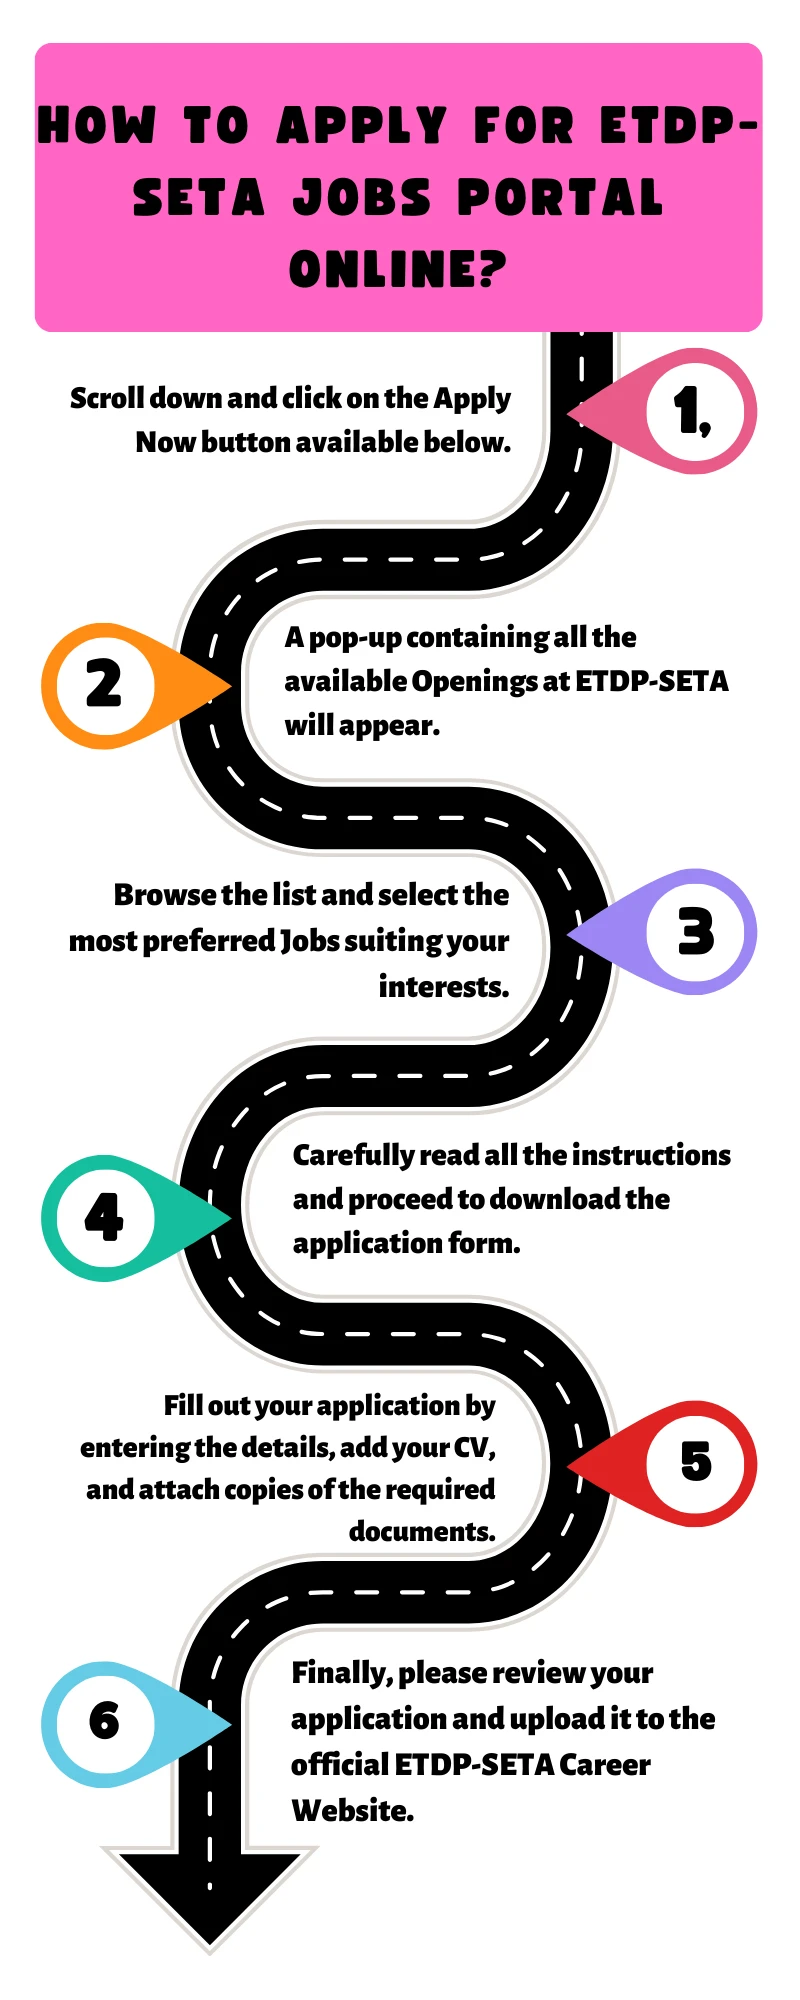 How To Apply for ETDP-SETA Jobs Portal Online?